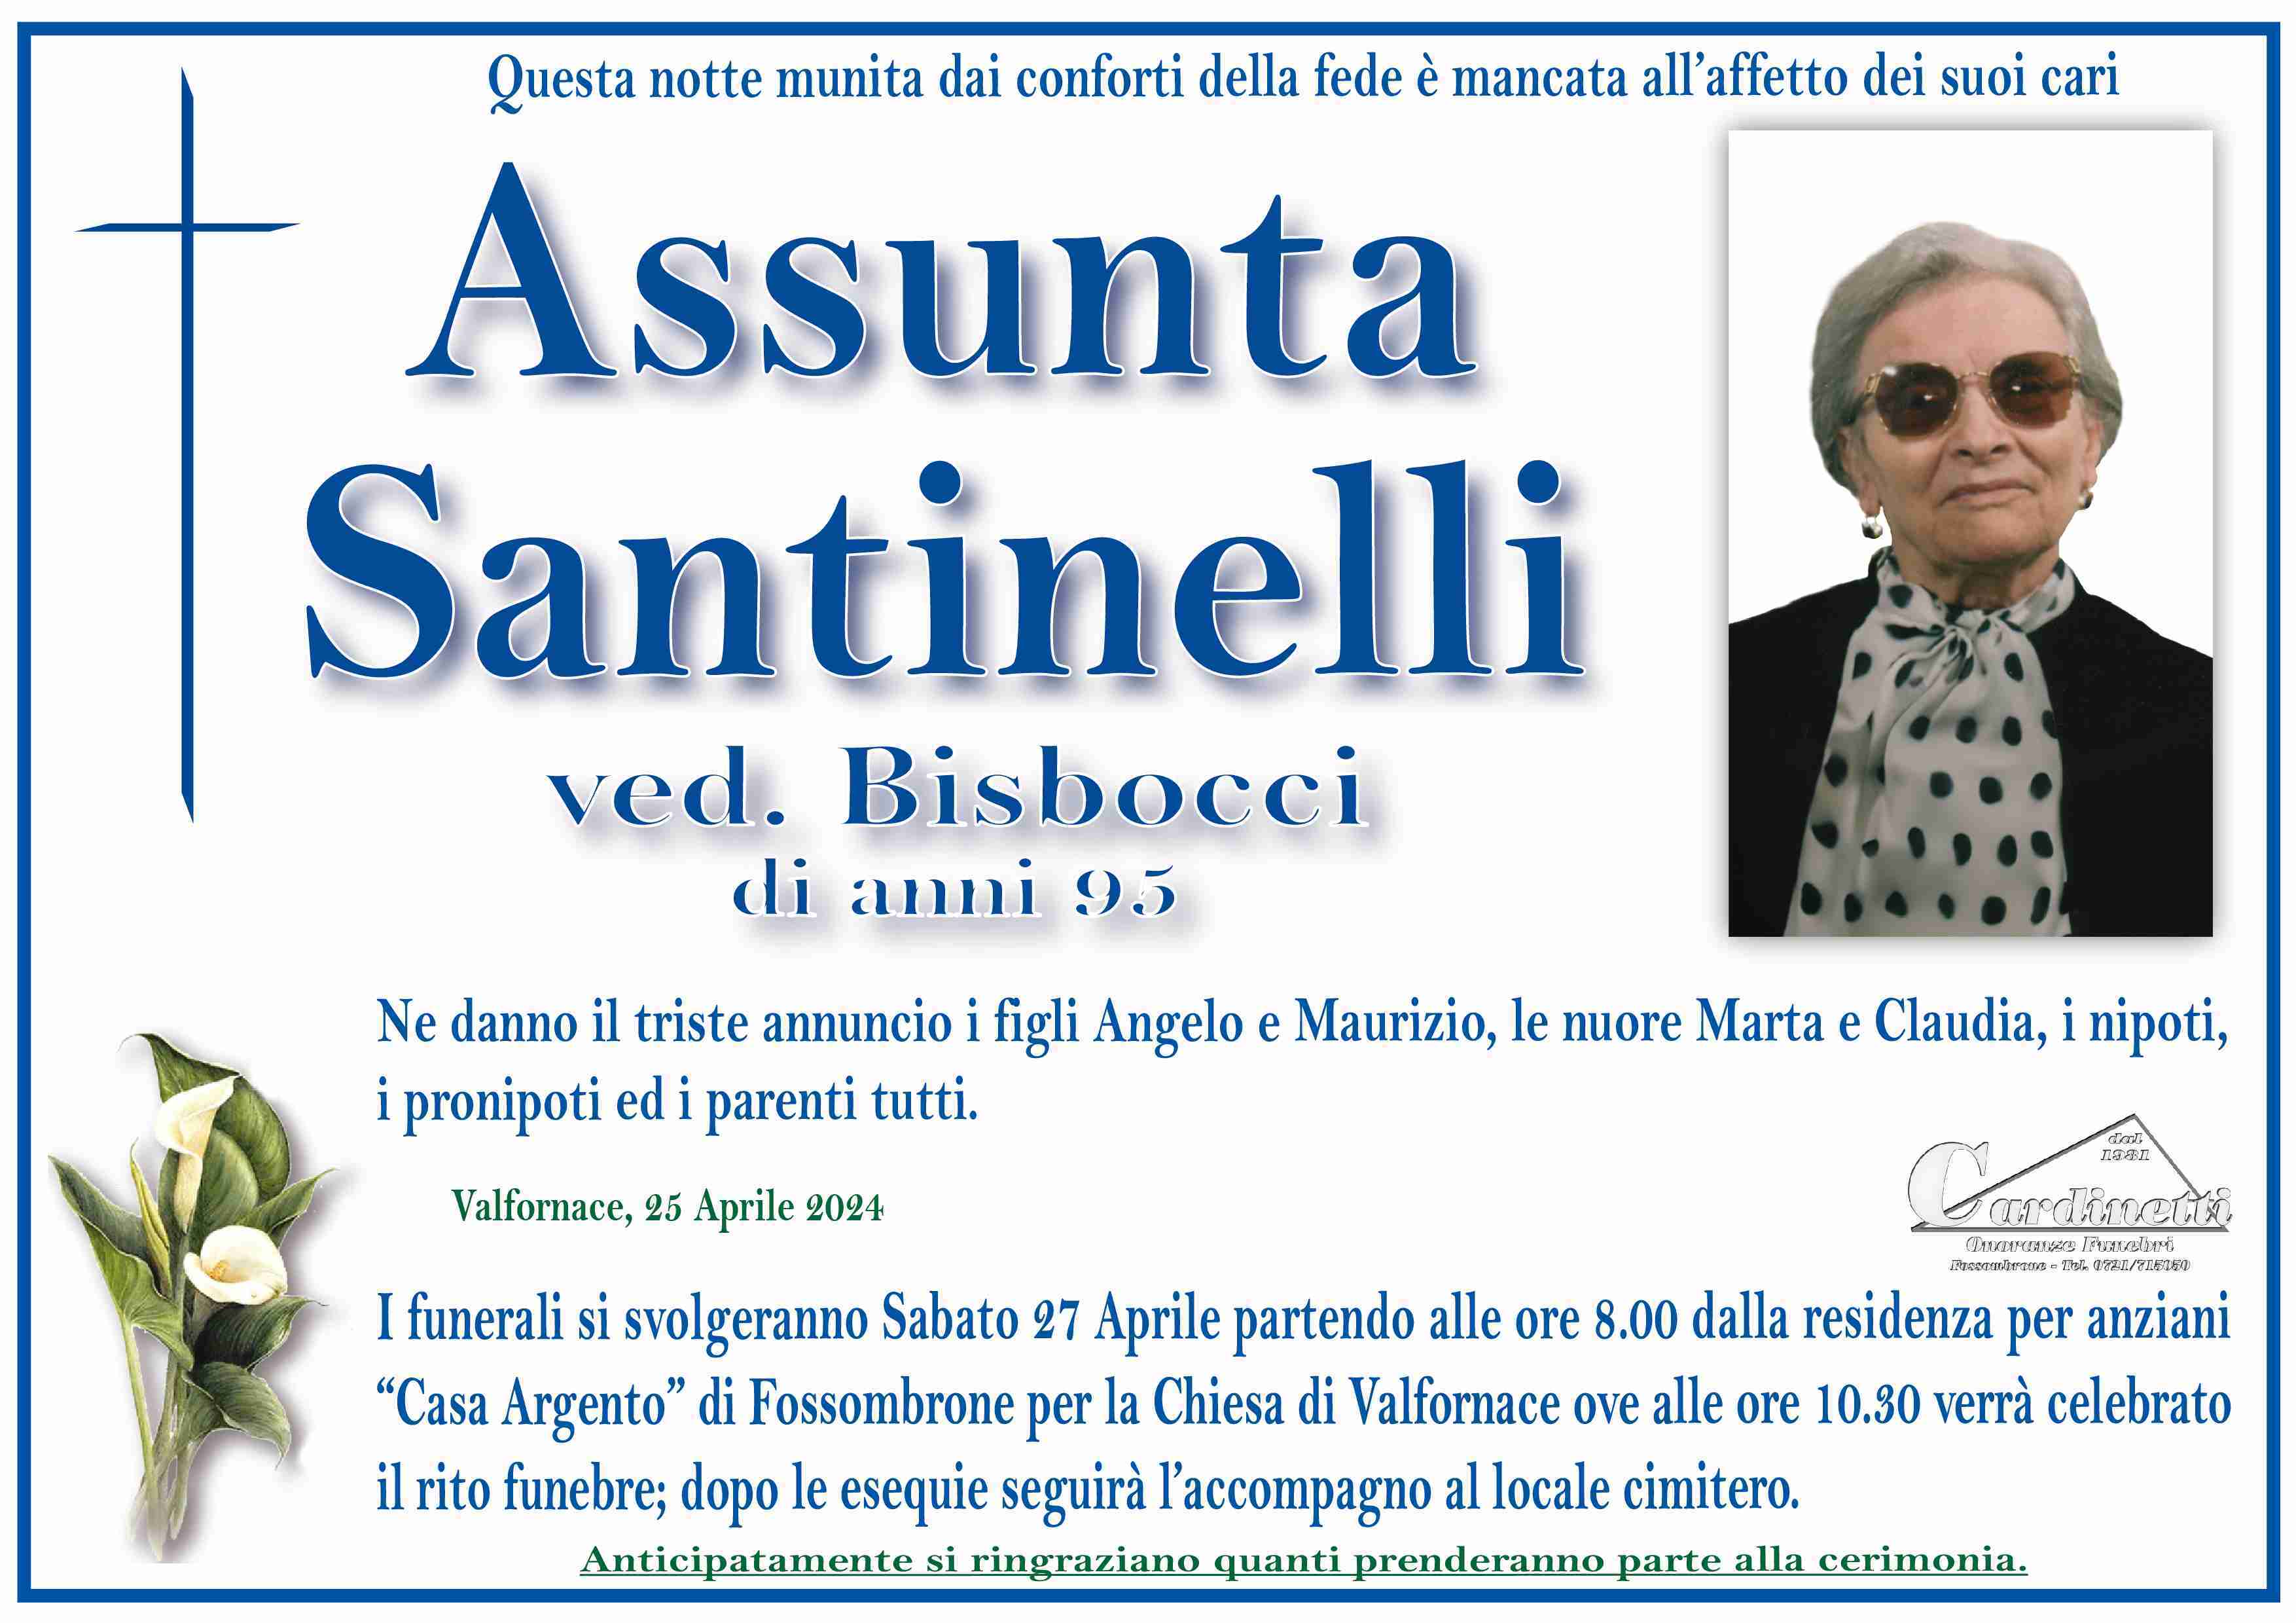 Assunta Santinelli